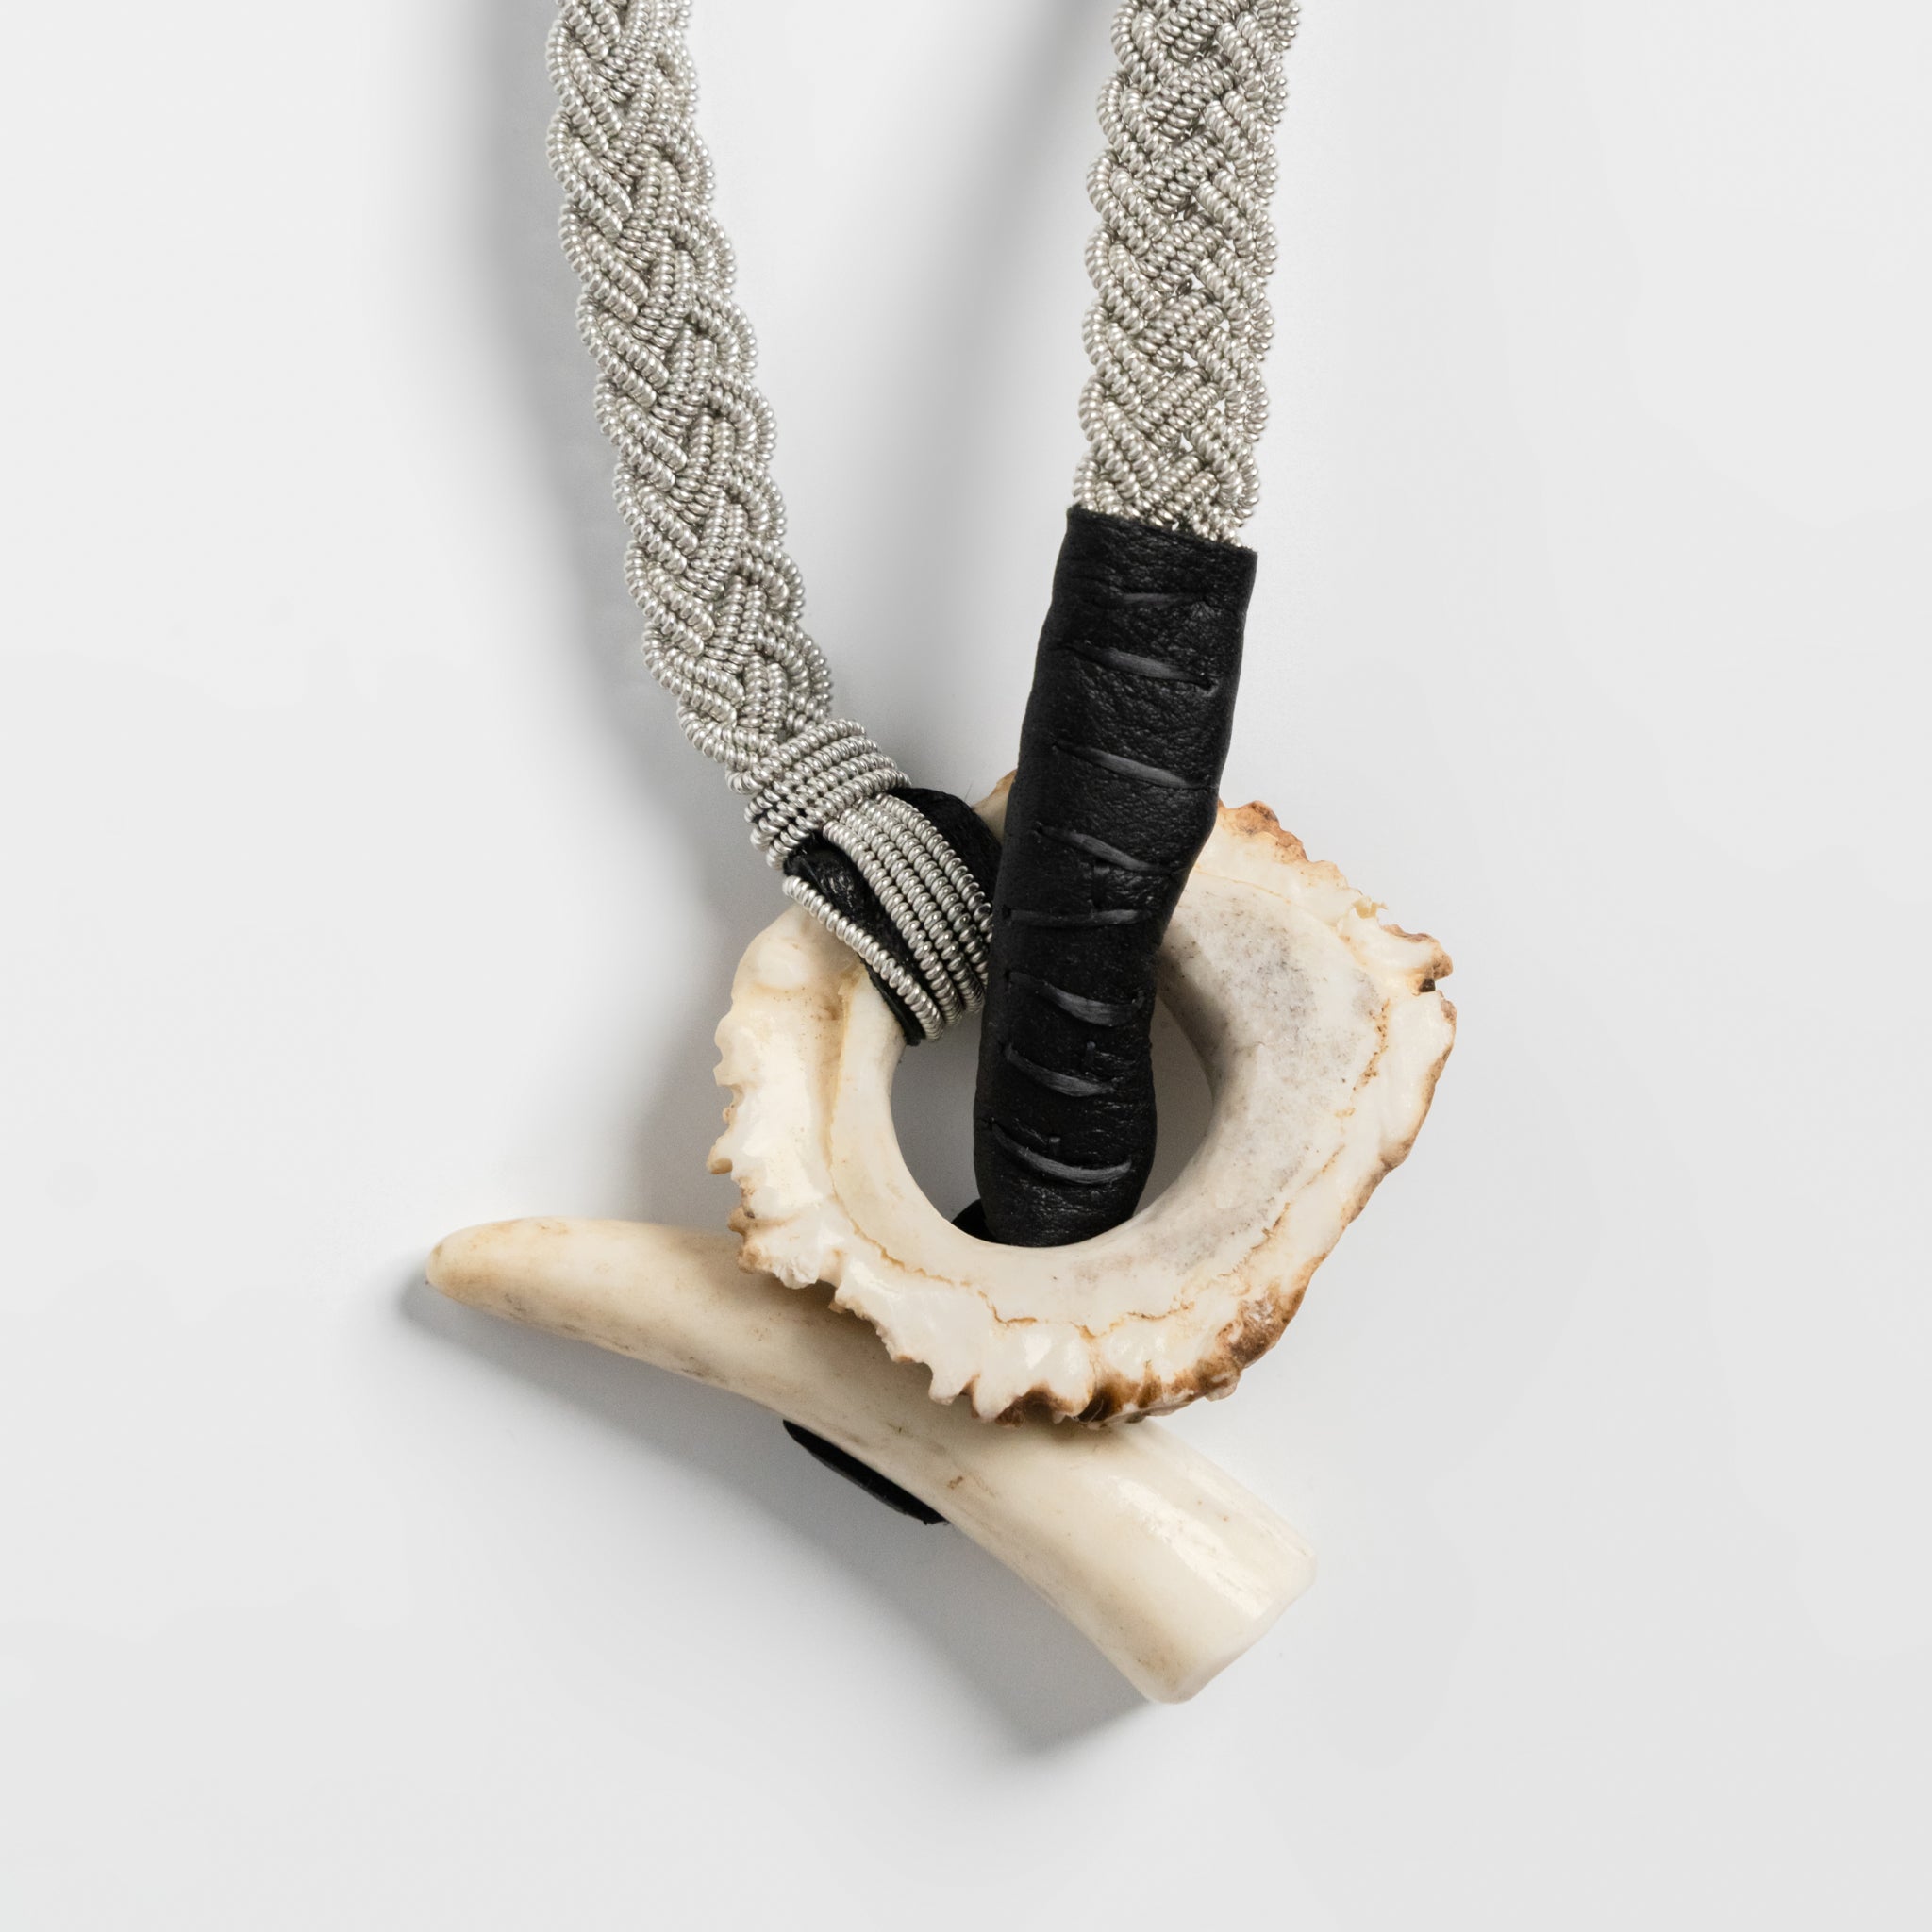 Five Strand Braid Necklace by Nancy Odalen - 24 Inch